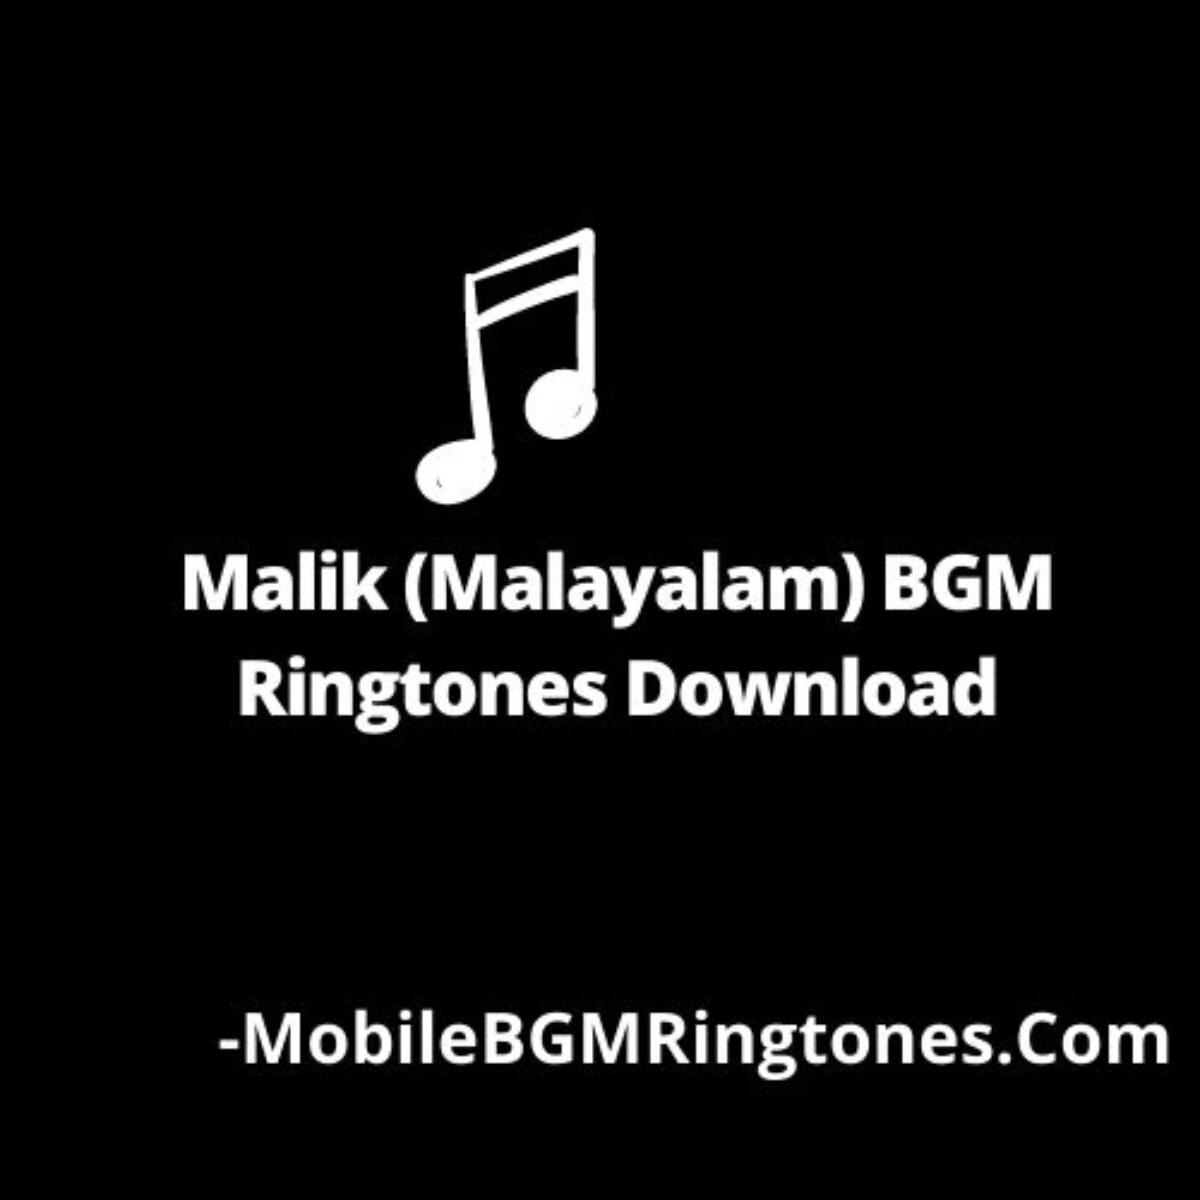 Malik Malayalam Bgm Ringtones Download Mobilebgmringtones Com